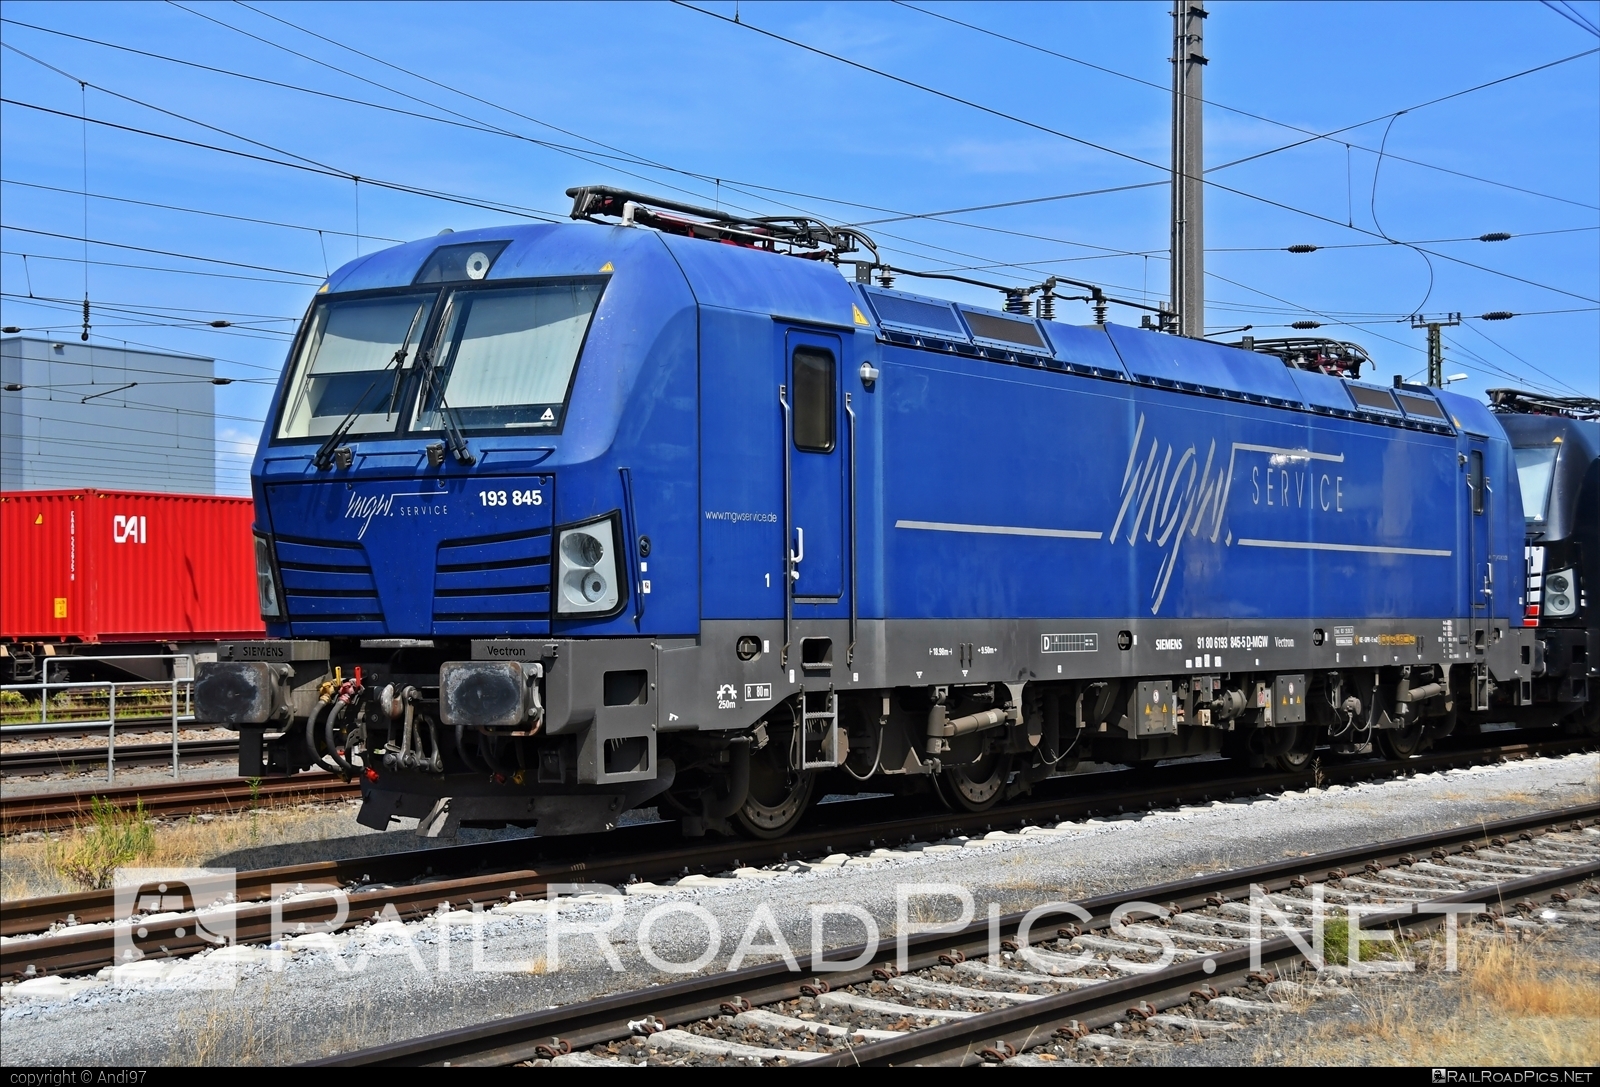 Siemens Vectron AC - 193 845 operated by Wiener Lokalbahnen Cargo GmbH #mgw #mgwServiceGmbH #siemens #siemensVectron #siemensVectronAC #vectron #vectronAC #wienerlokalbahnencargo #wienerlokalbahnencargogmbh #wlc